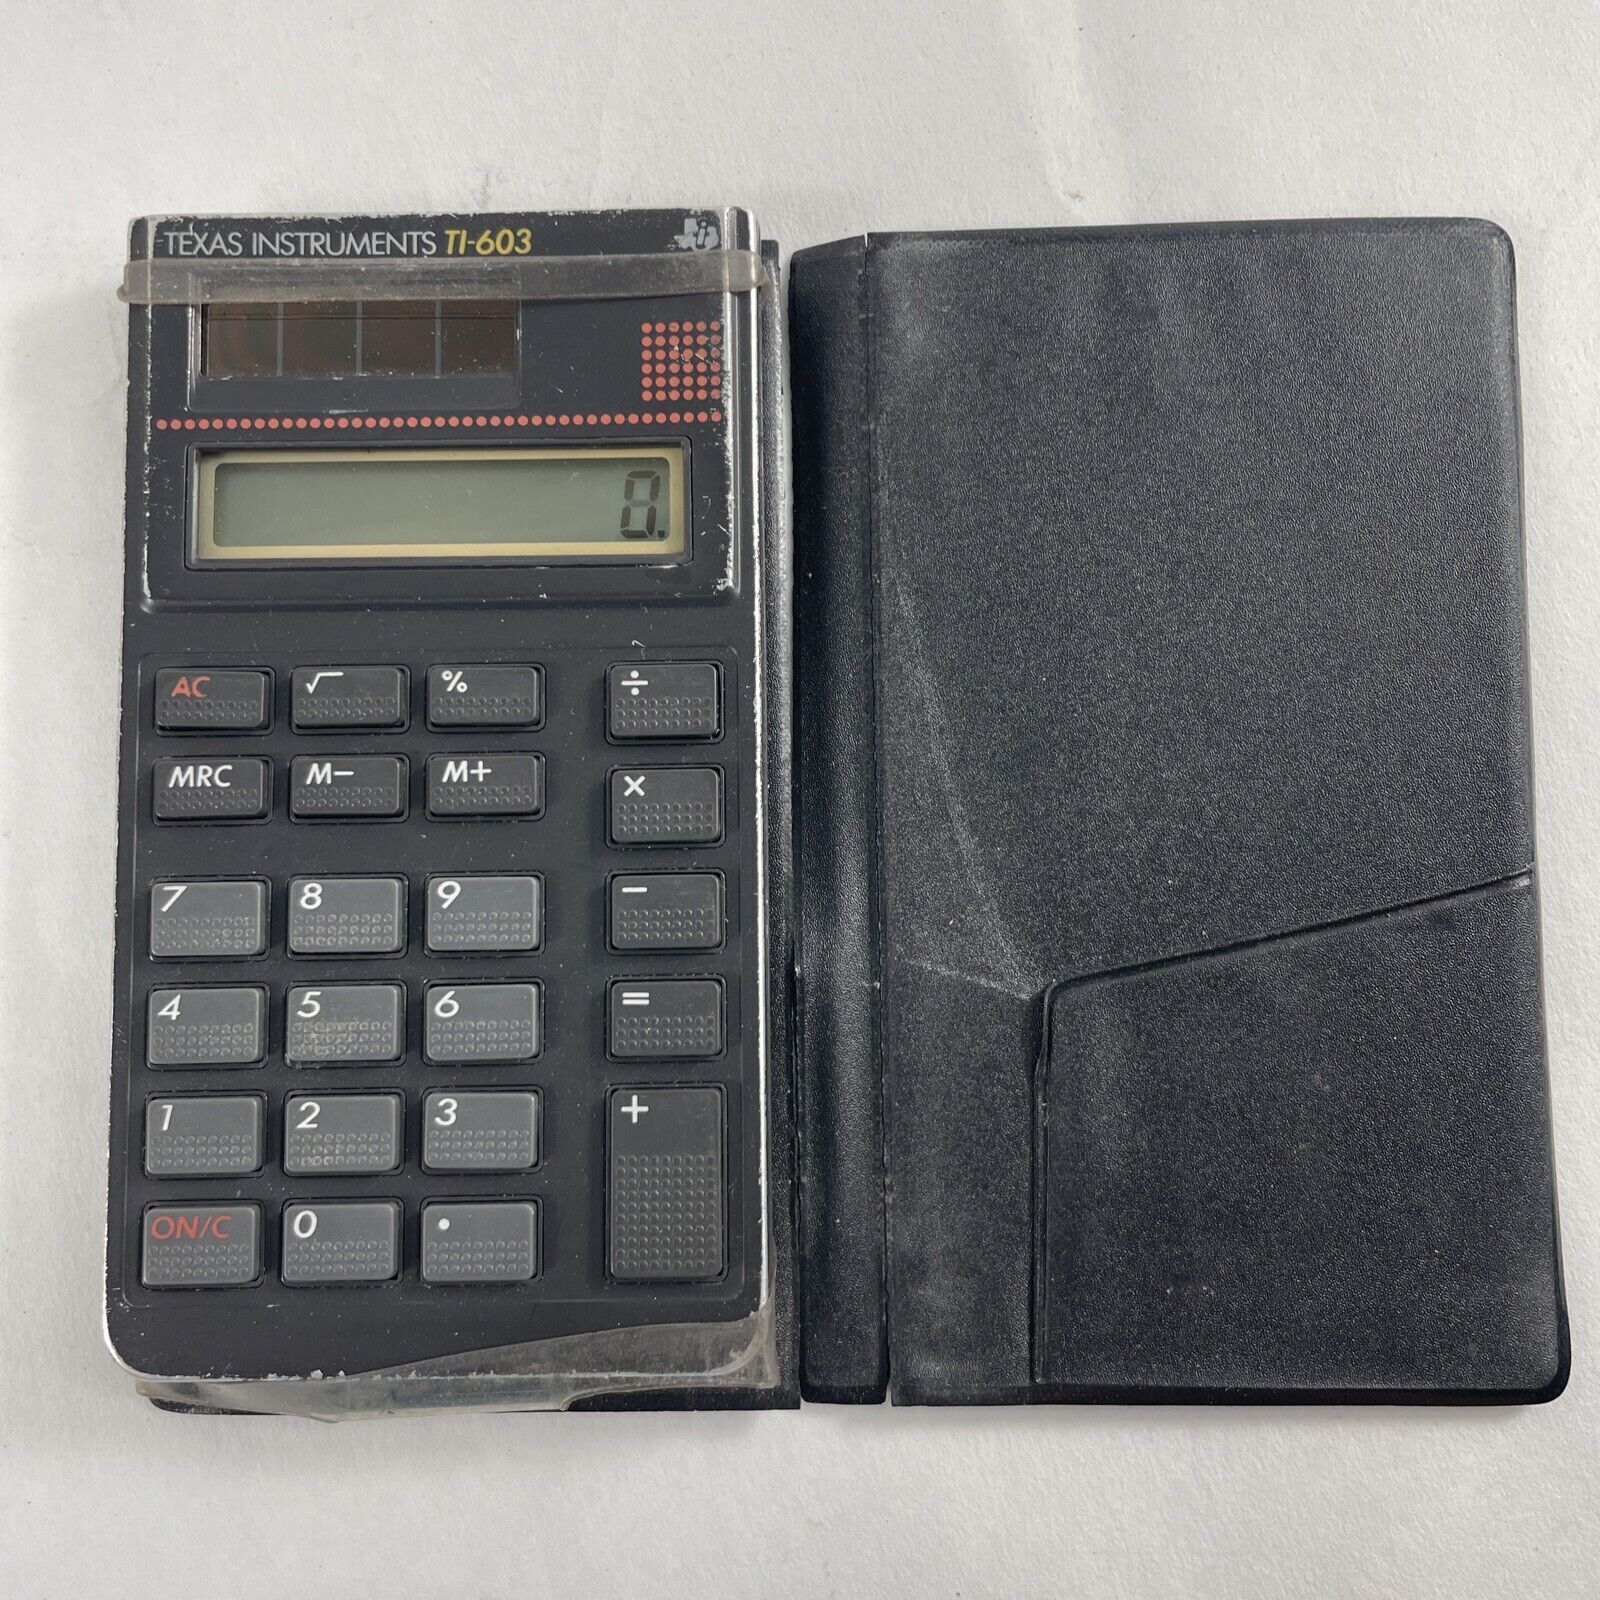 Rare 1987 Vintage Texas Instruments TI-603 Scientific Calculator W/ Case, Works